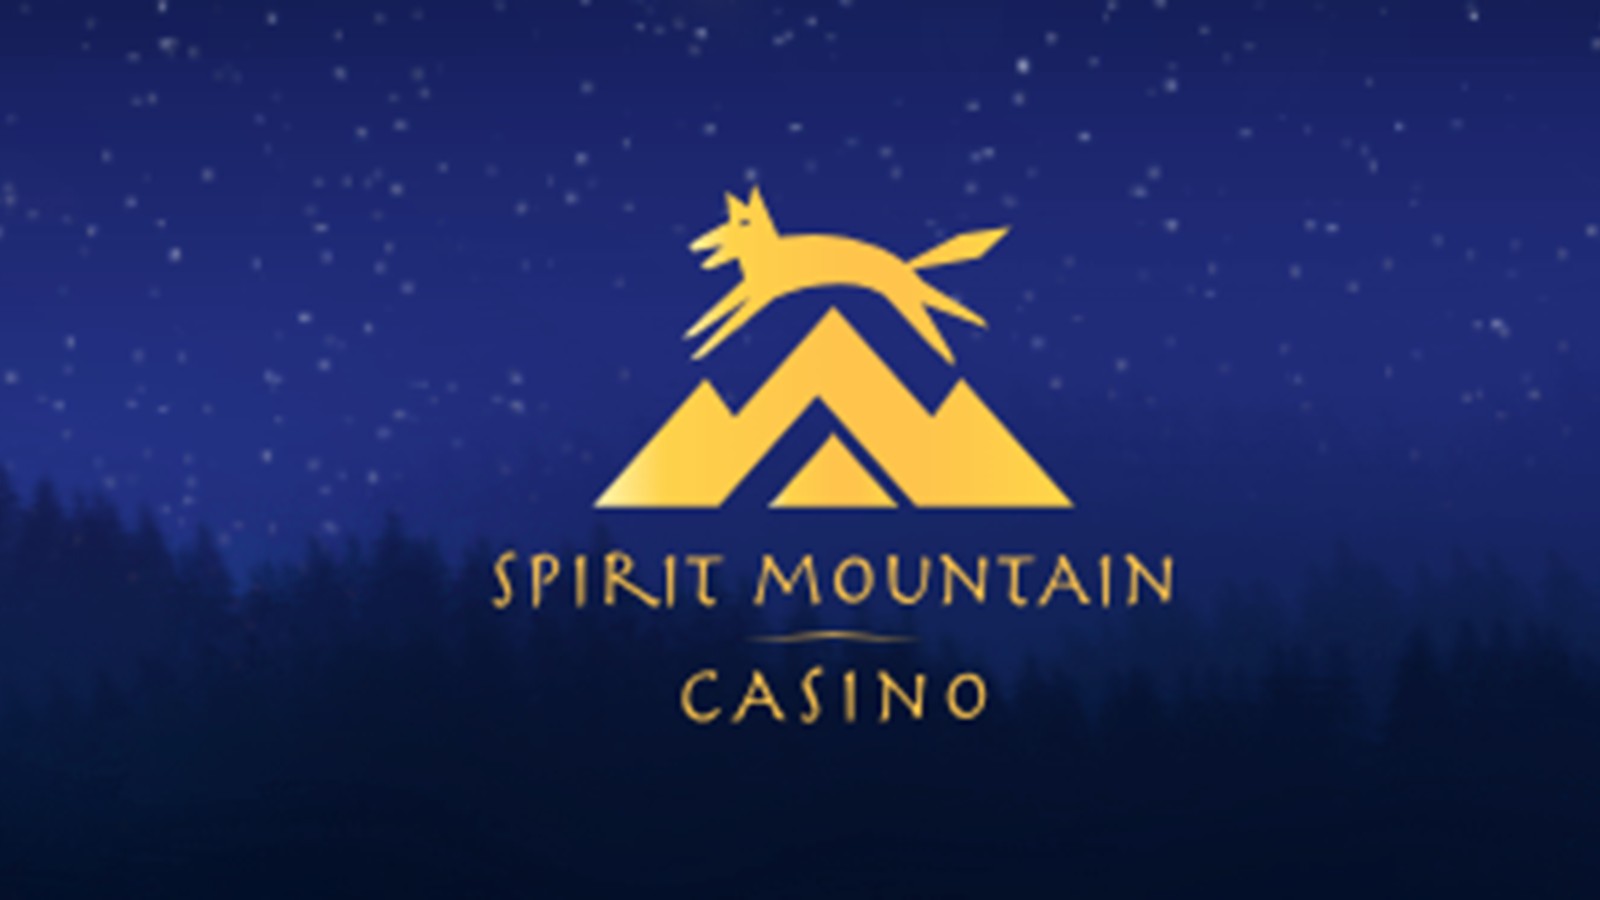 spirit mountain casino and lodge app